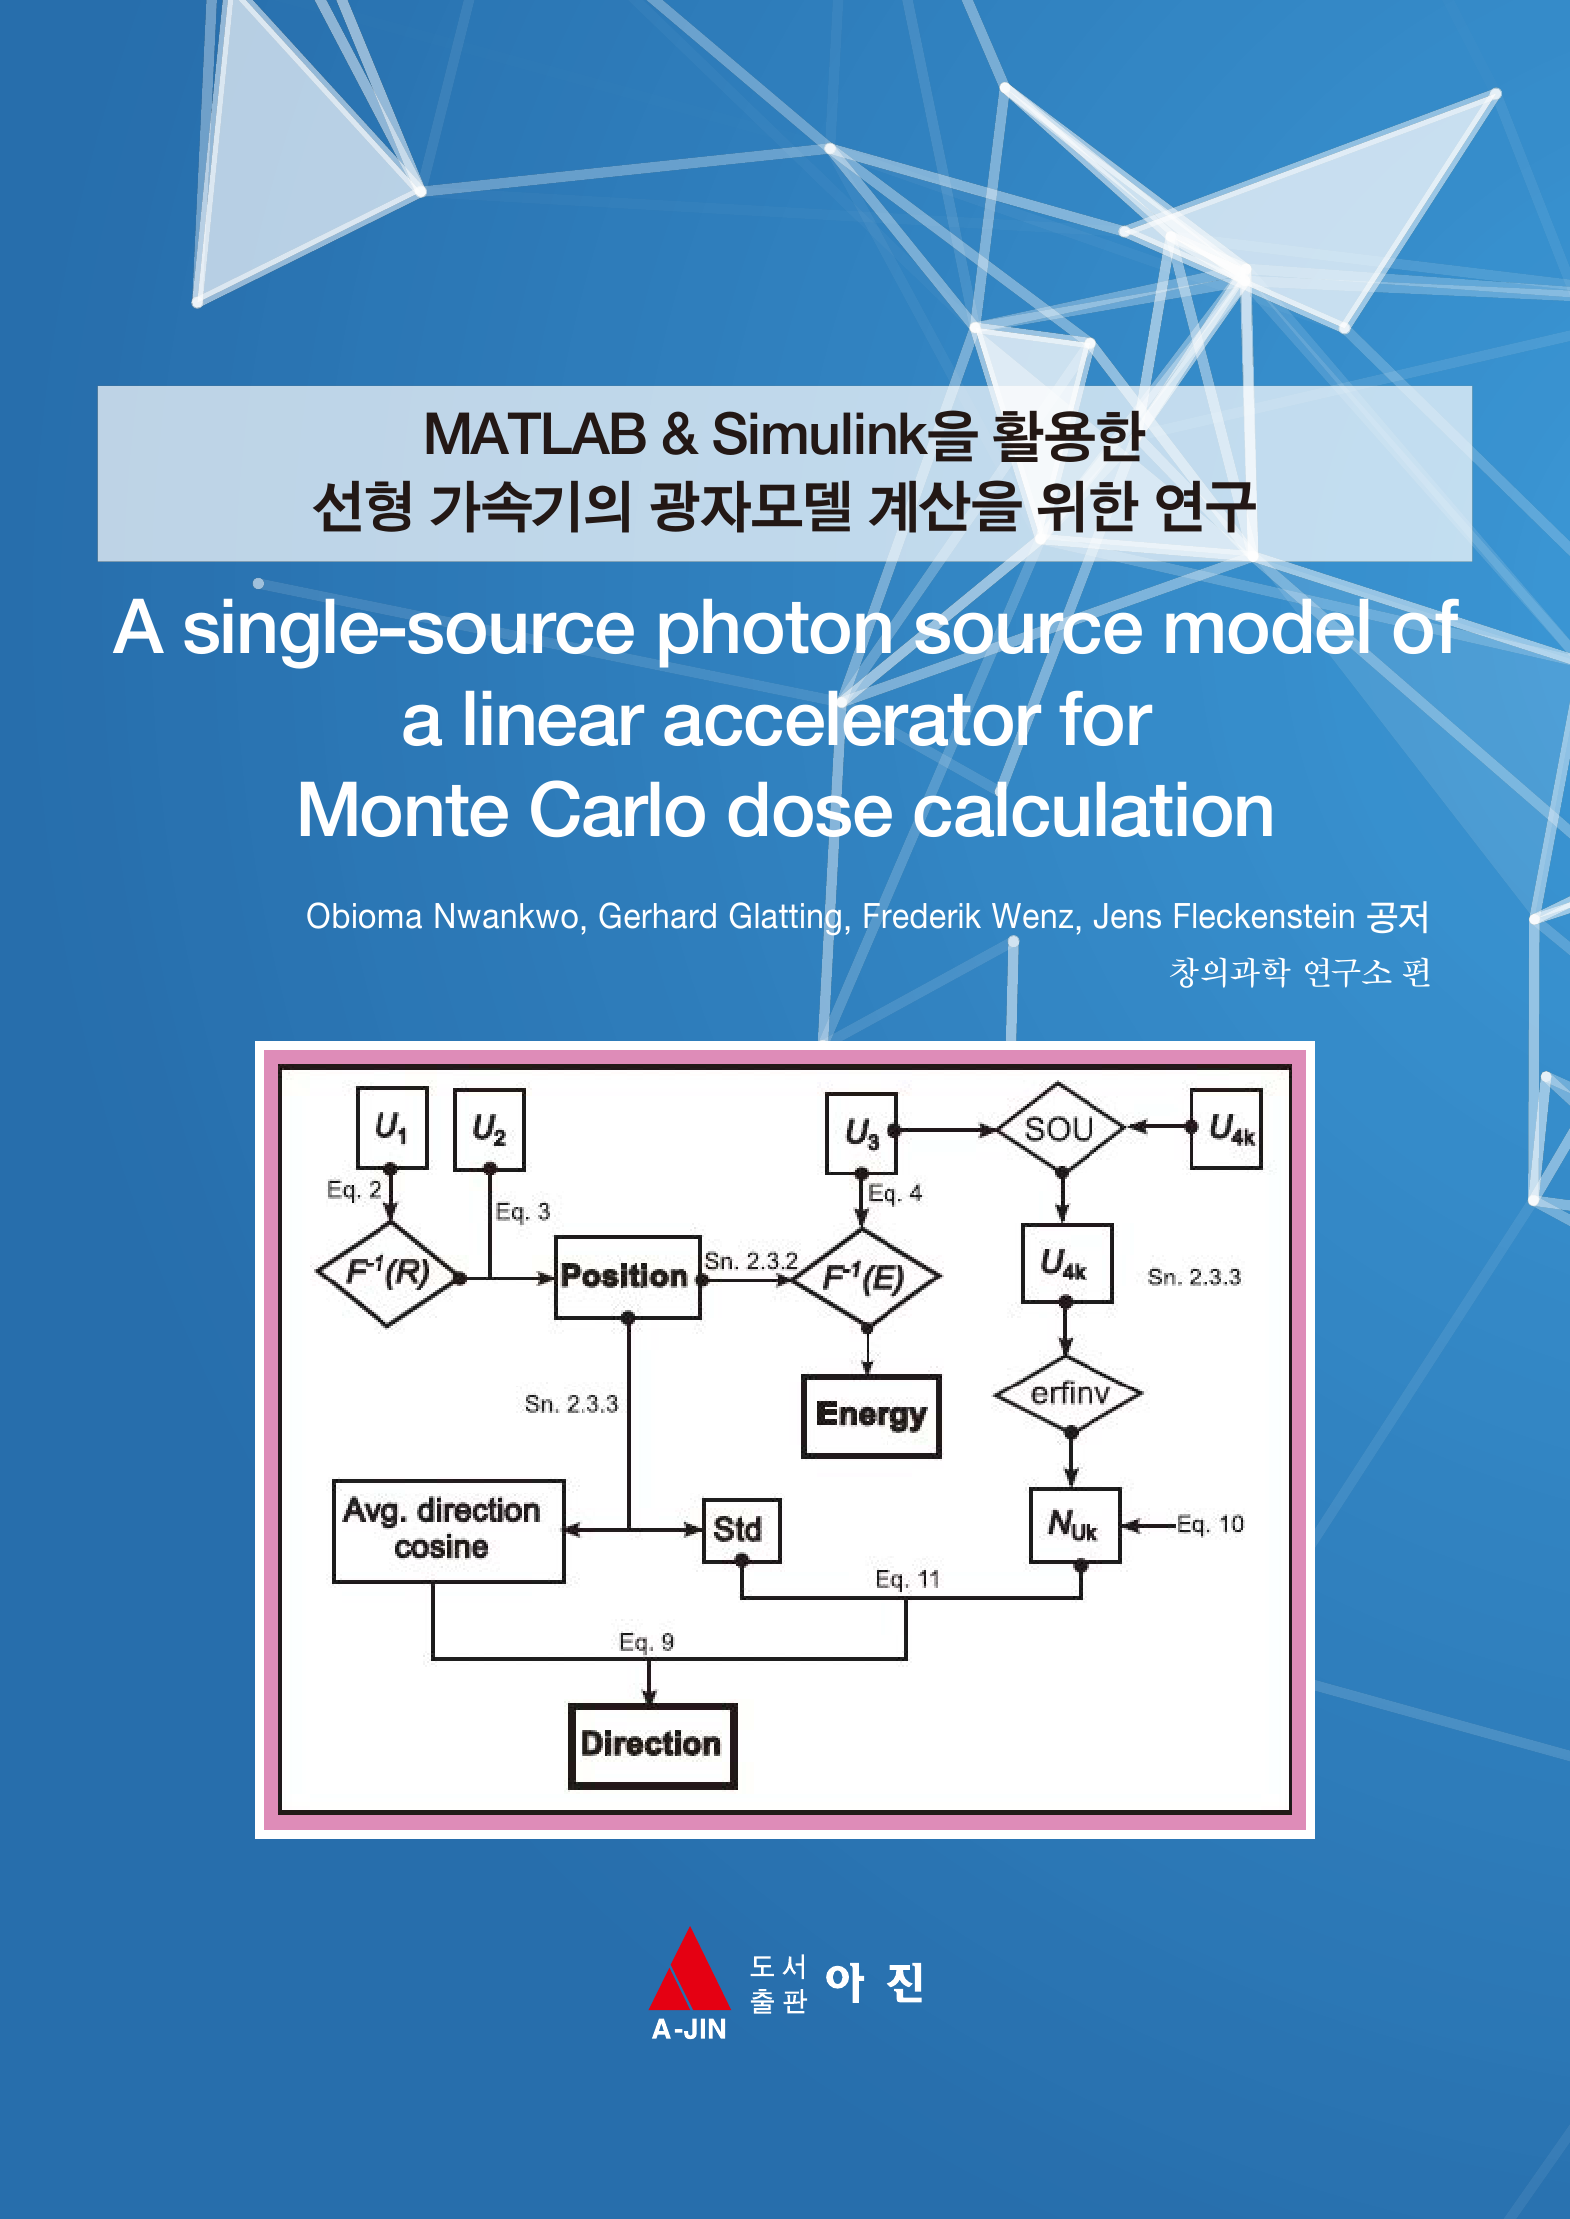 MATLAB & Simulink을 활용한 선형 가속기의 광자모델 계산을 위한 연구(A single-source photon source model of a linear accelerator for Monte Carlo dose calculation)